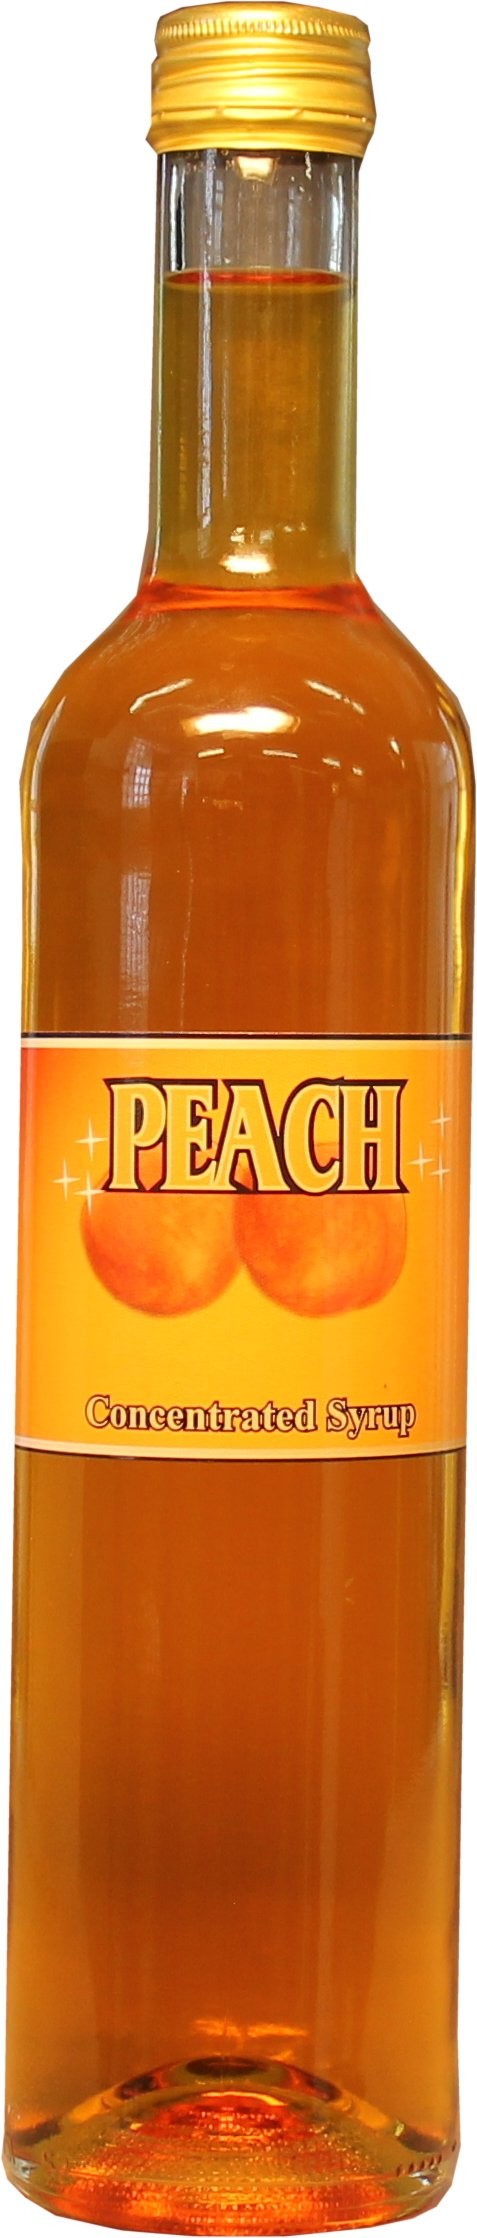 Persiko sirap / Peach Syrup.